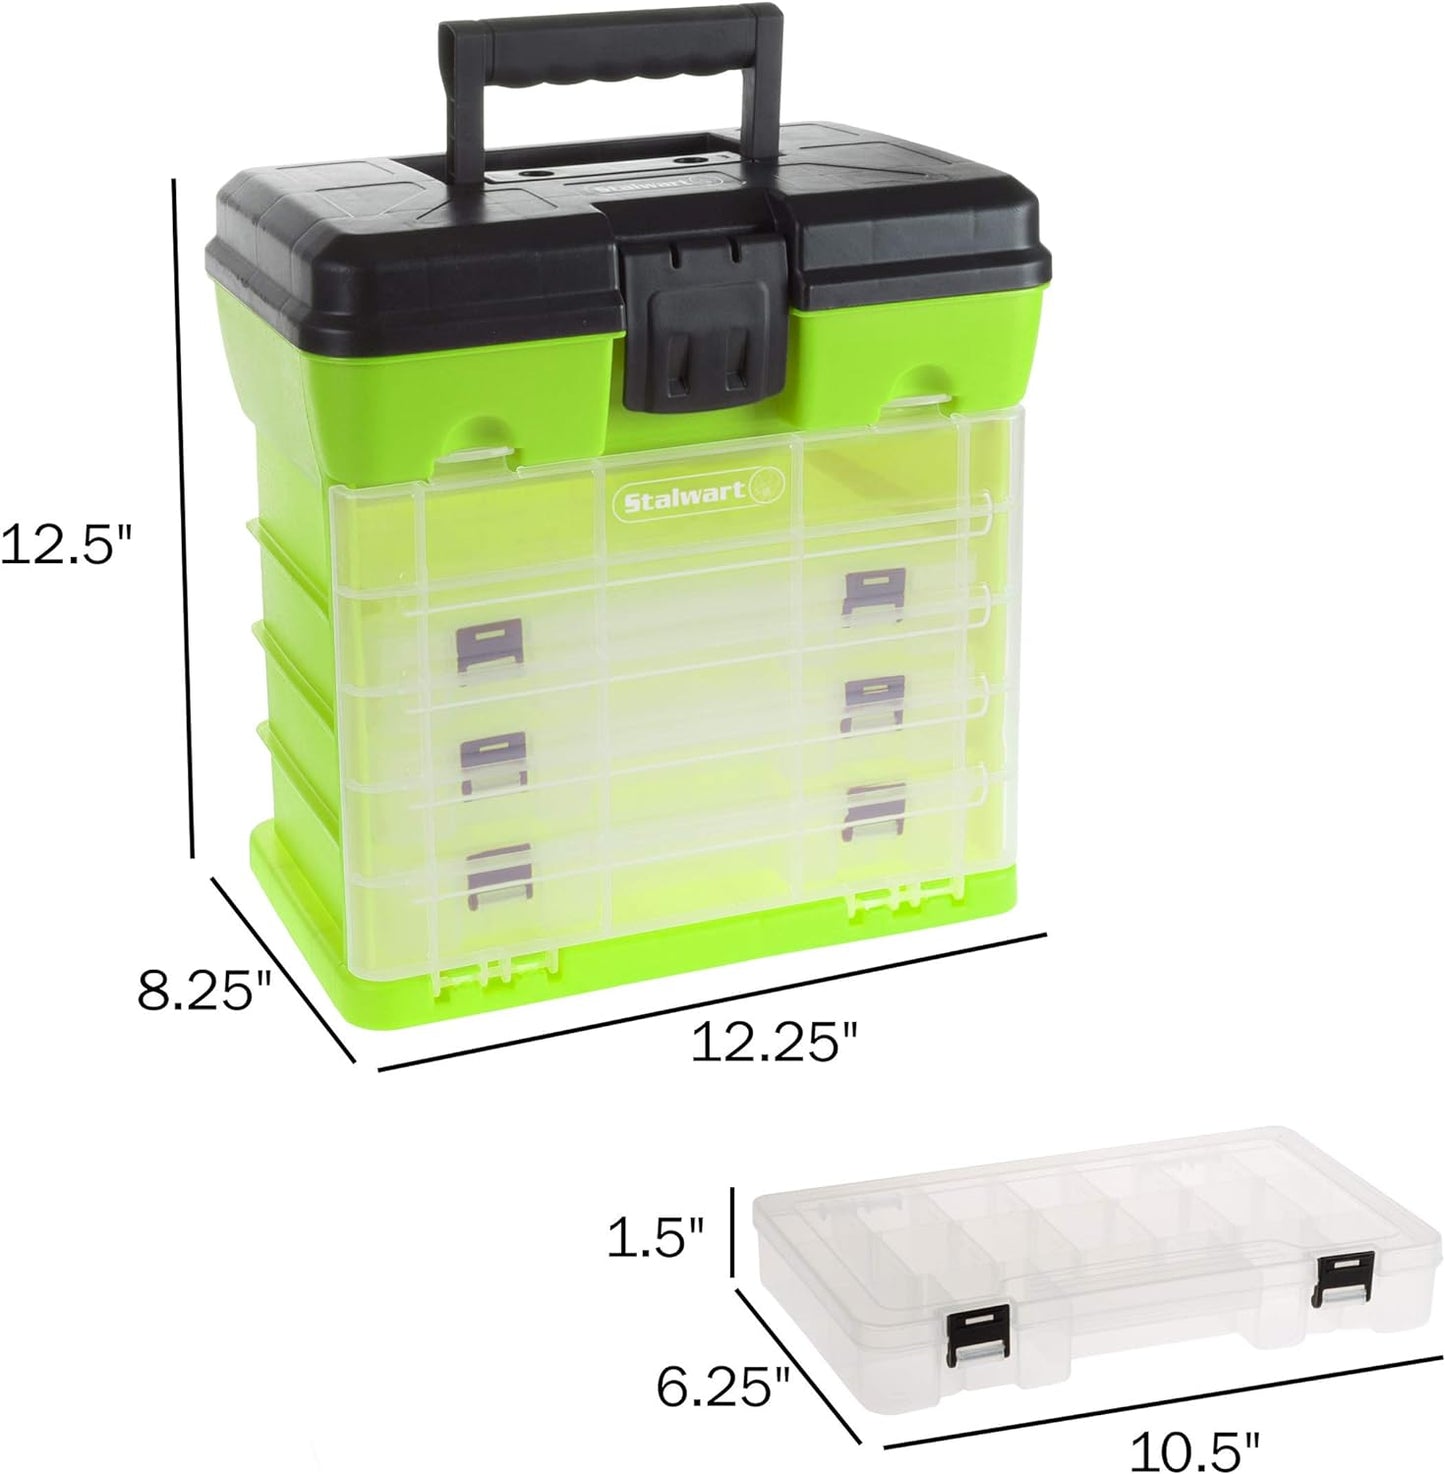 Storage and Tool Box-Durable Organizer